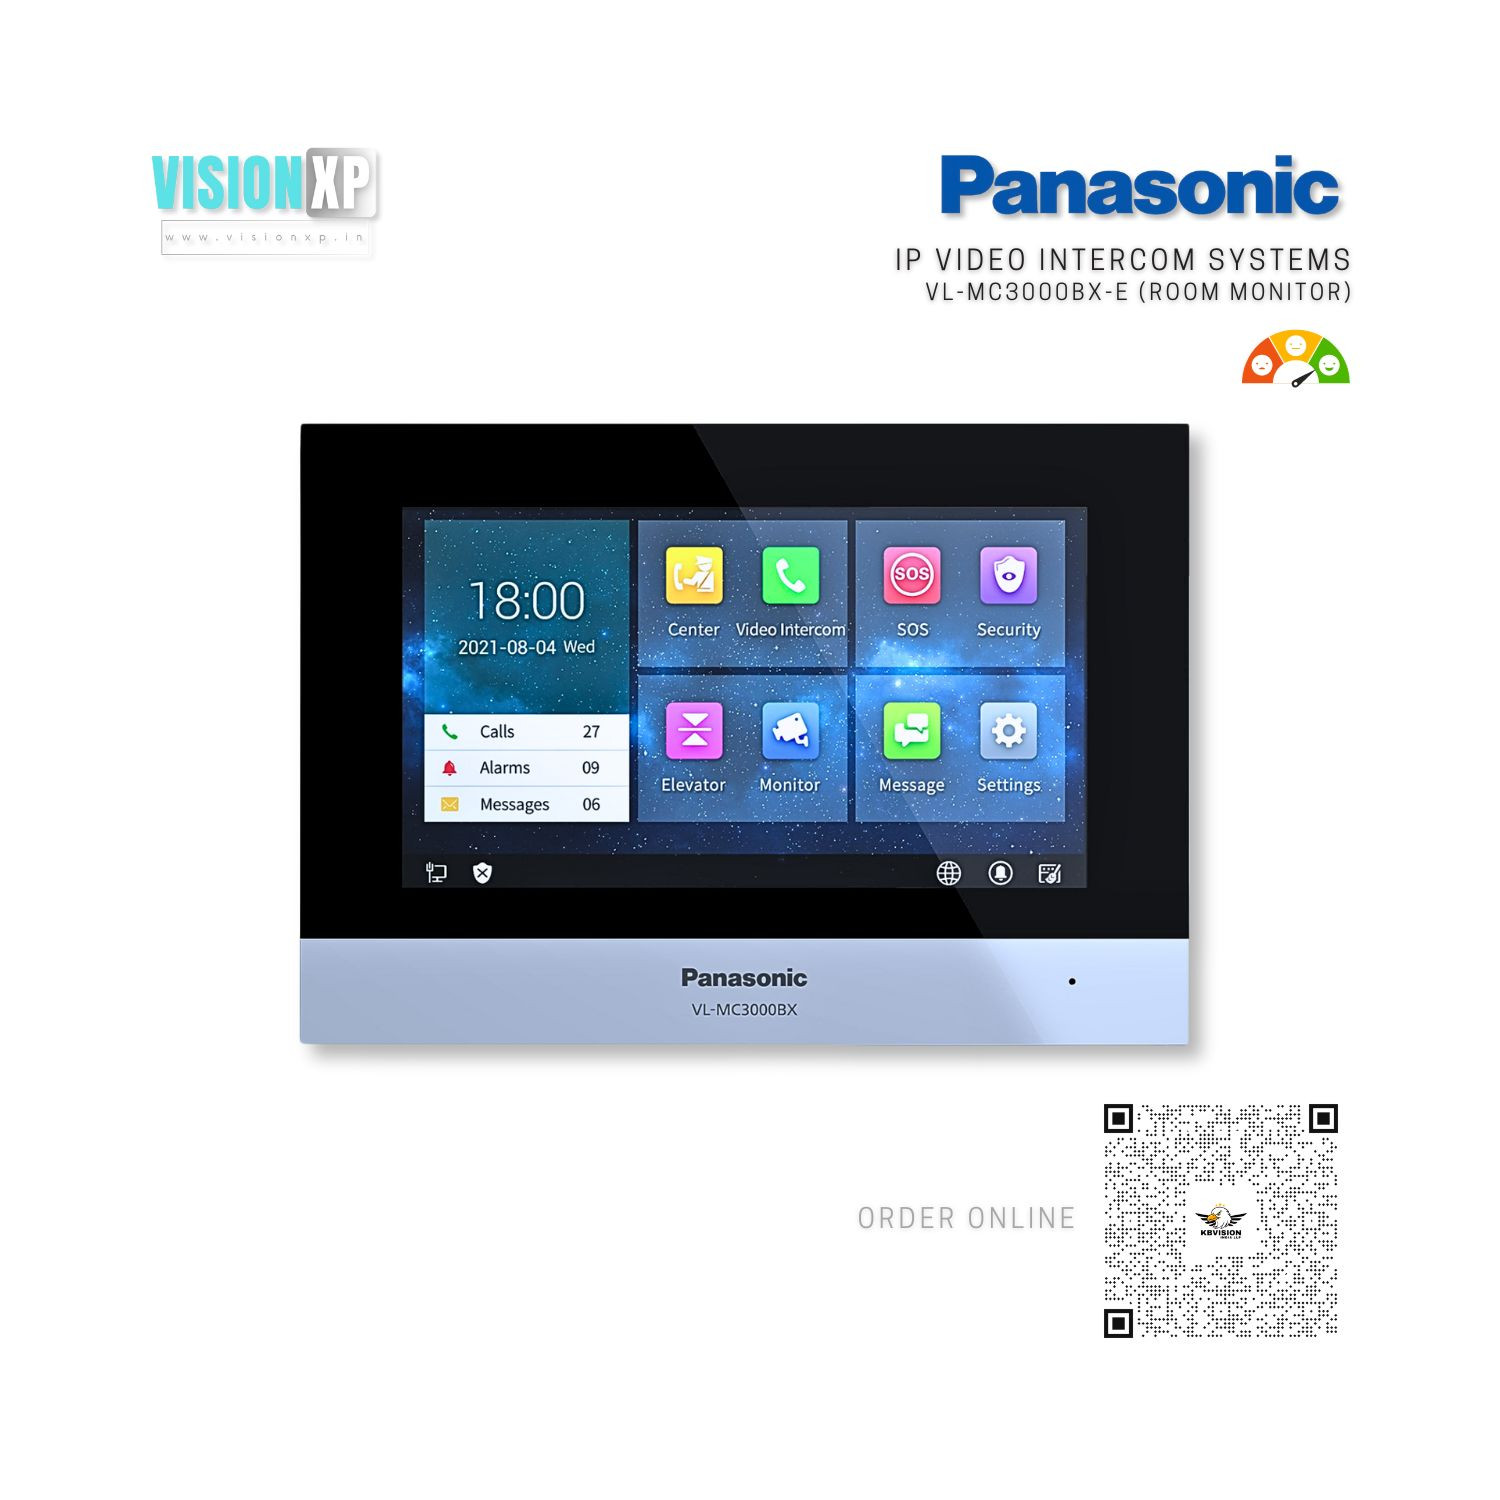 Panasonic VL-MC300BX-E Room Monitor IP Video Intercom Systems